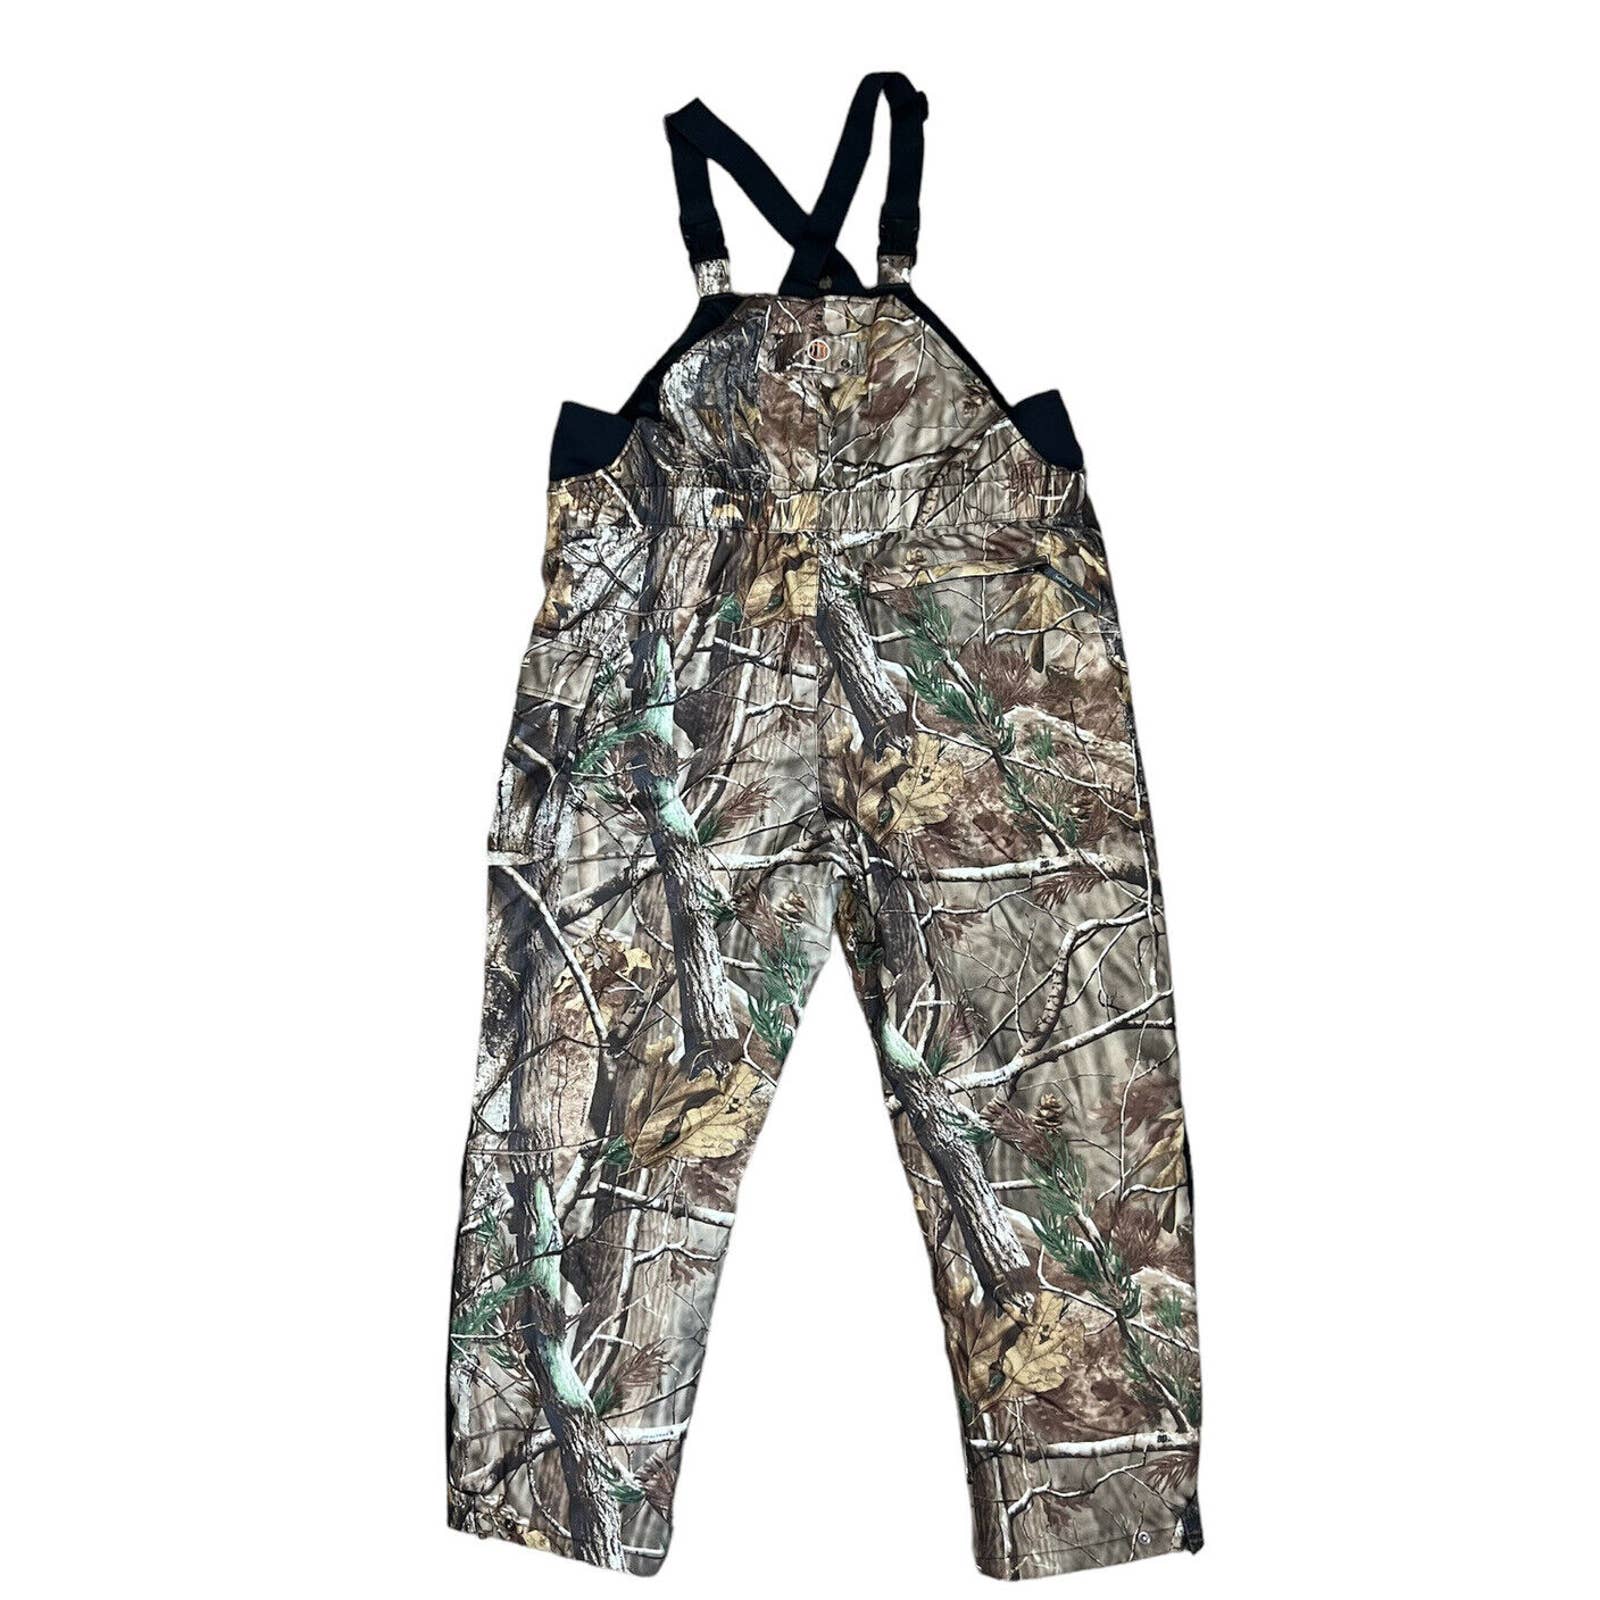 FIELD & STREAM Waterproof Hunting Bib Pants Men’s XL Realtree Camo Insulated